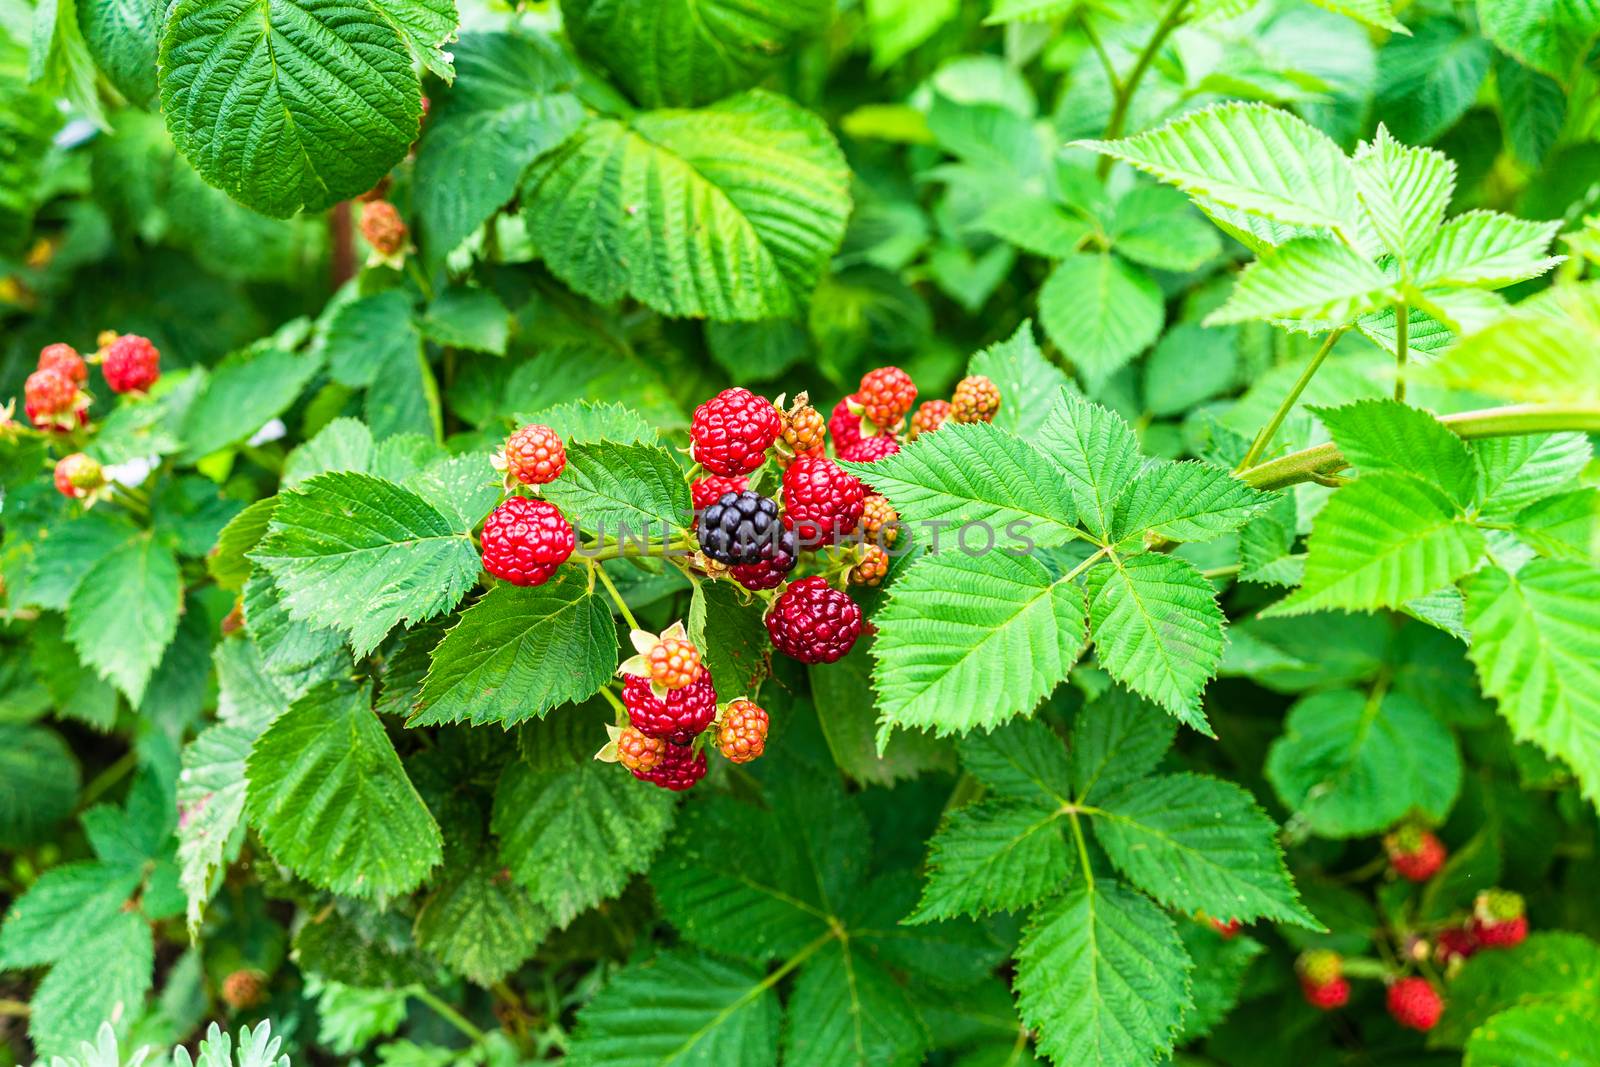 Close up photo of unripe and ripe blackberry fruits on a shrub i by vladispas